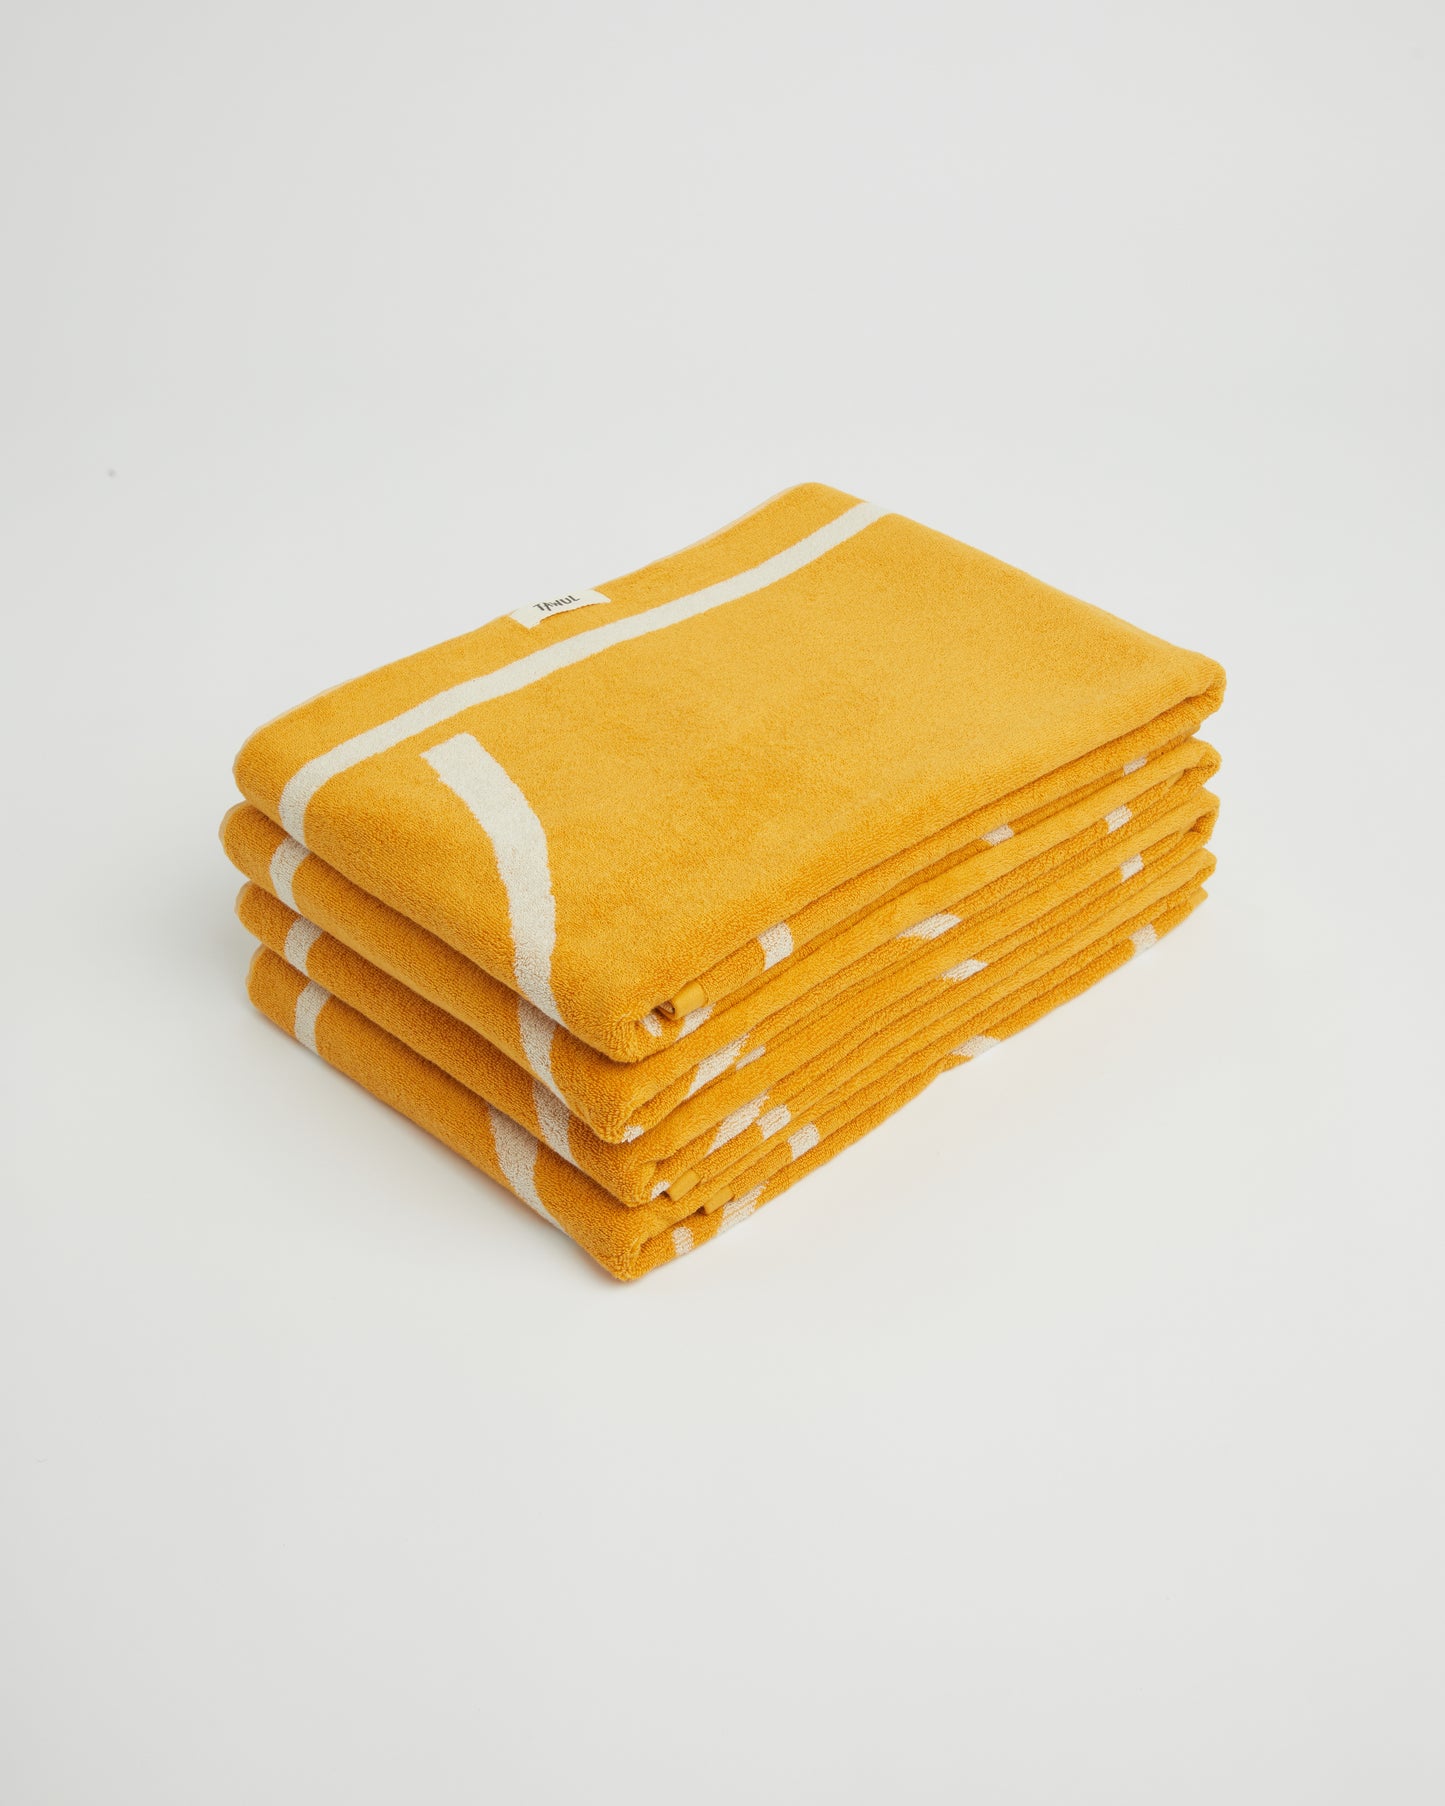 8 x set of Bee Towels